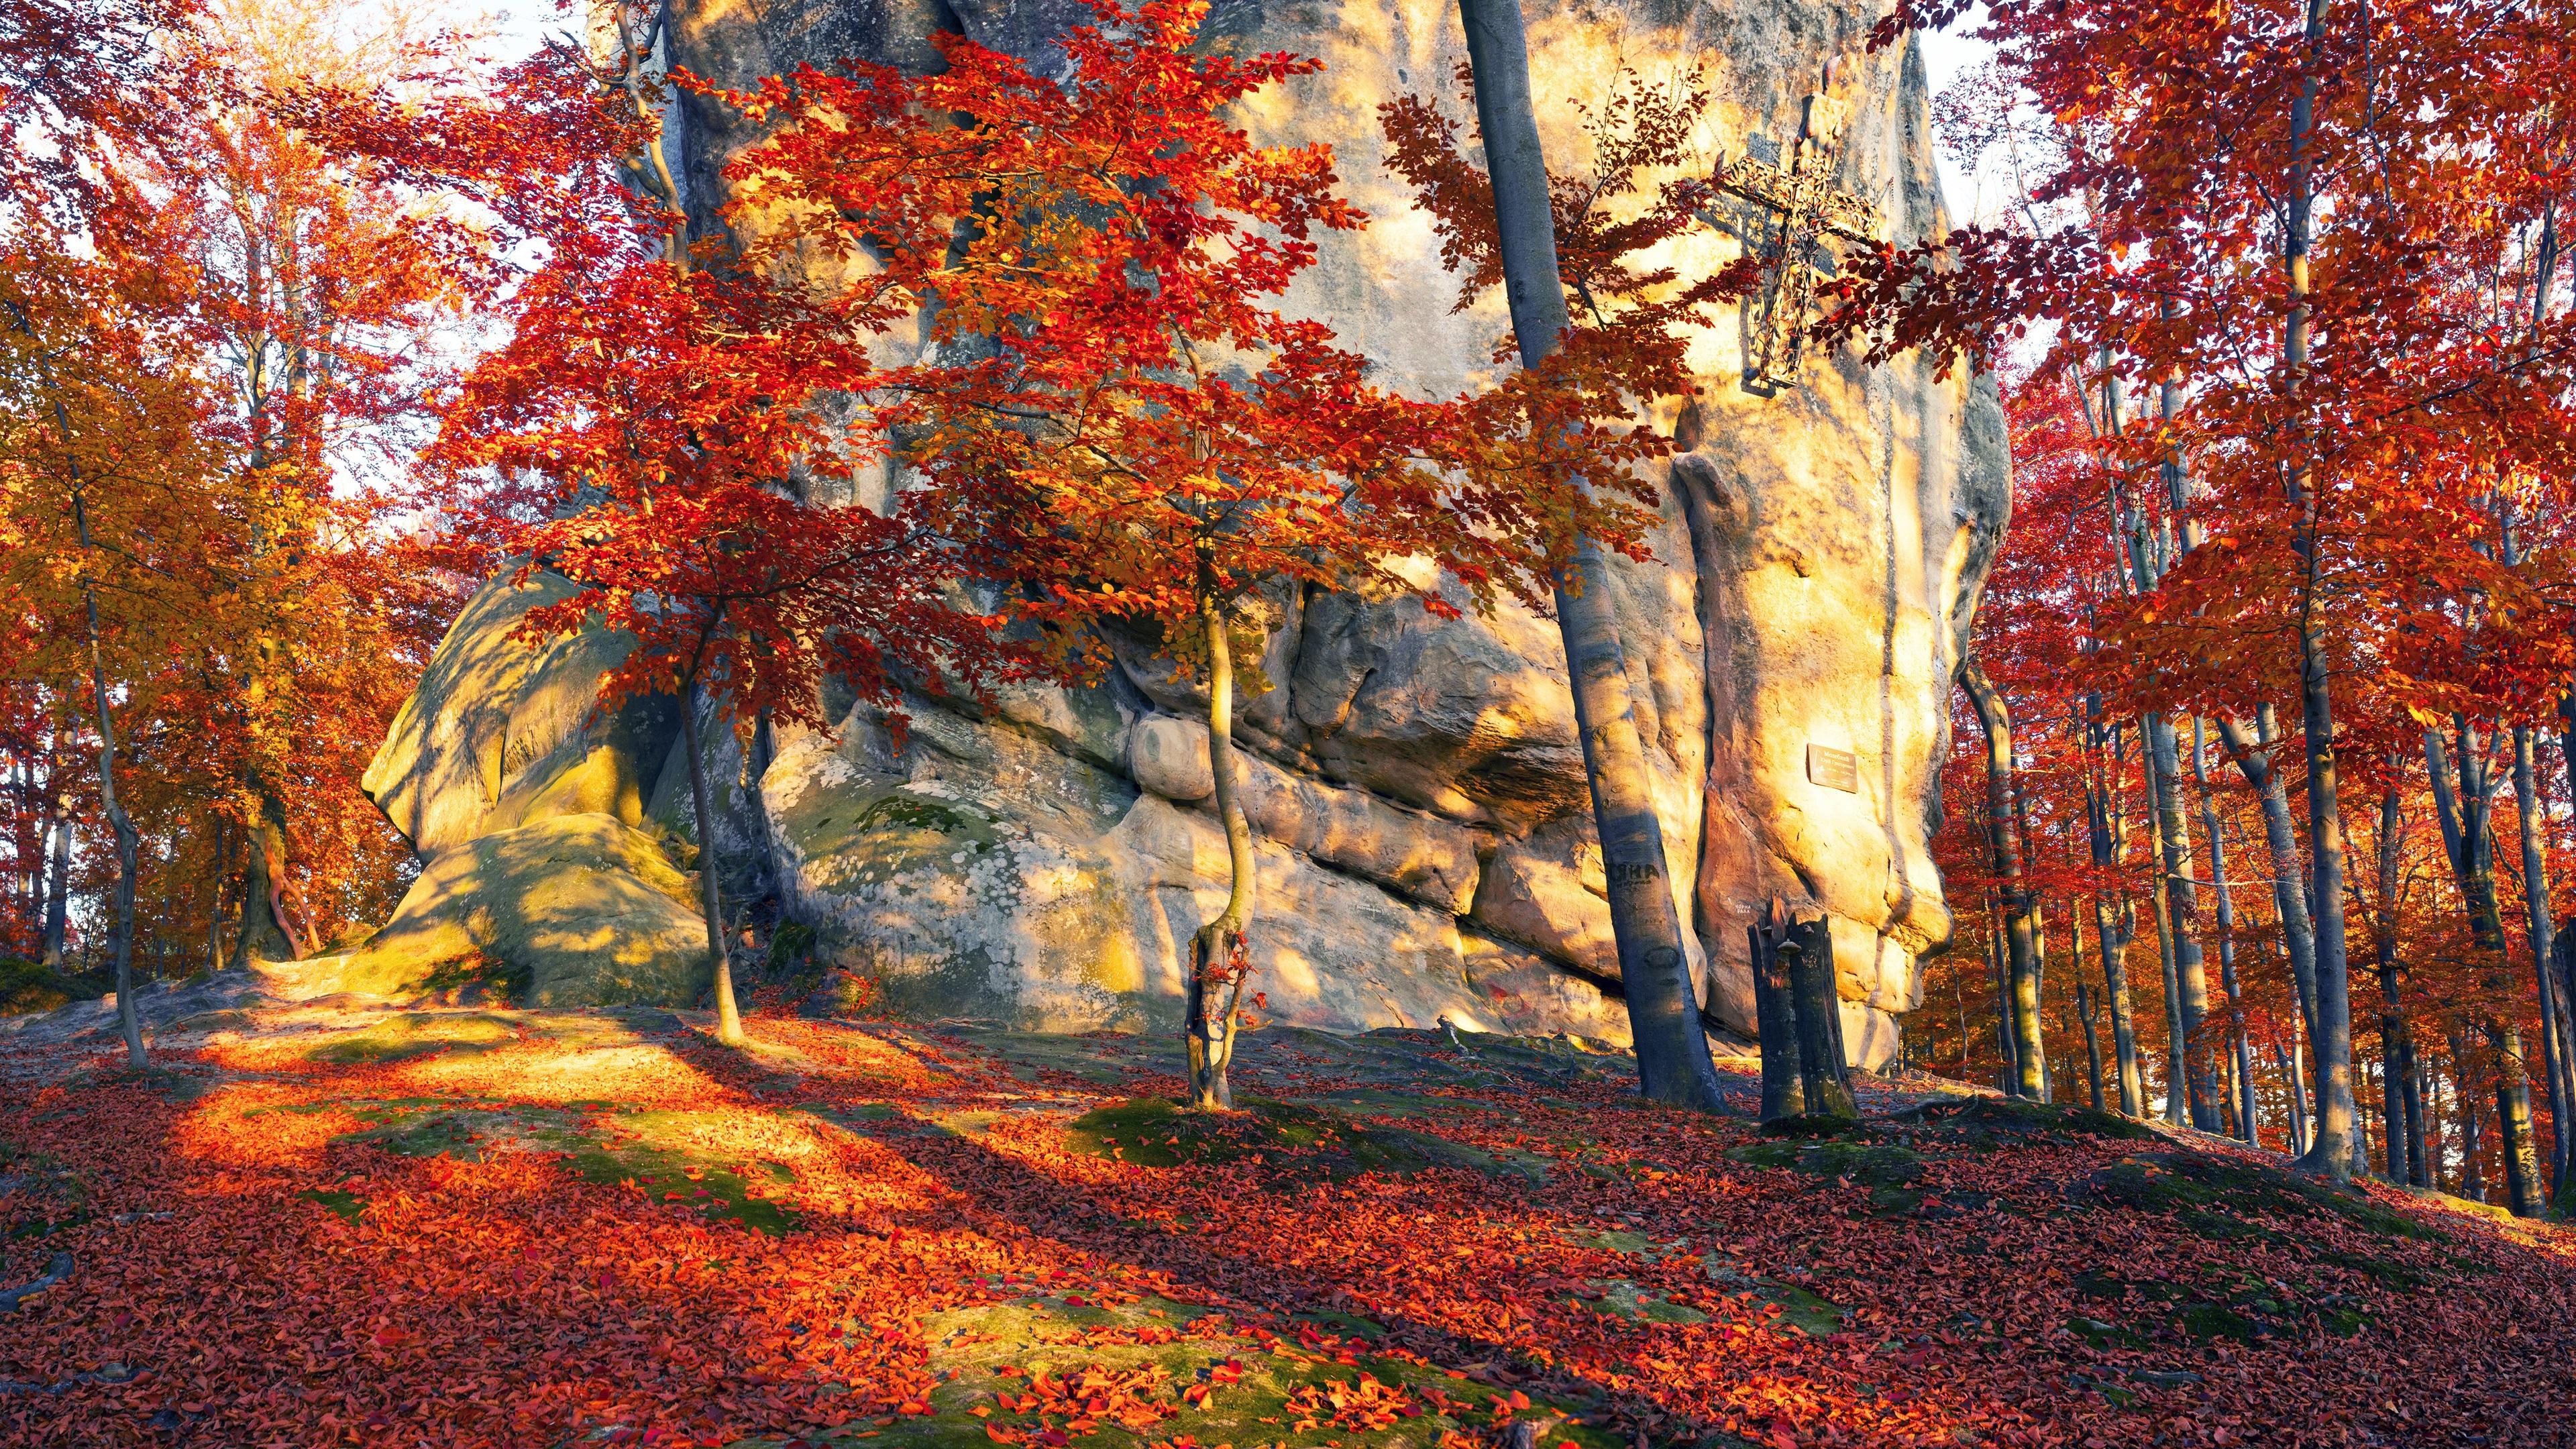 Wallpaper Ukraine, stones, trees, red leaves, autumn, sun rays